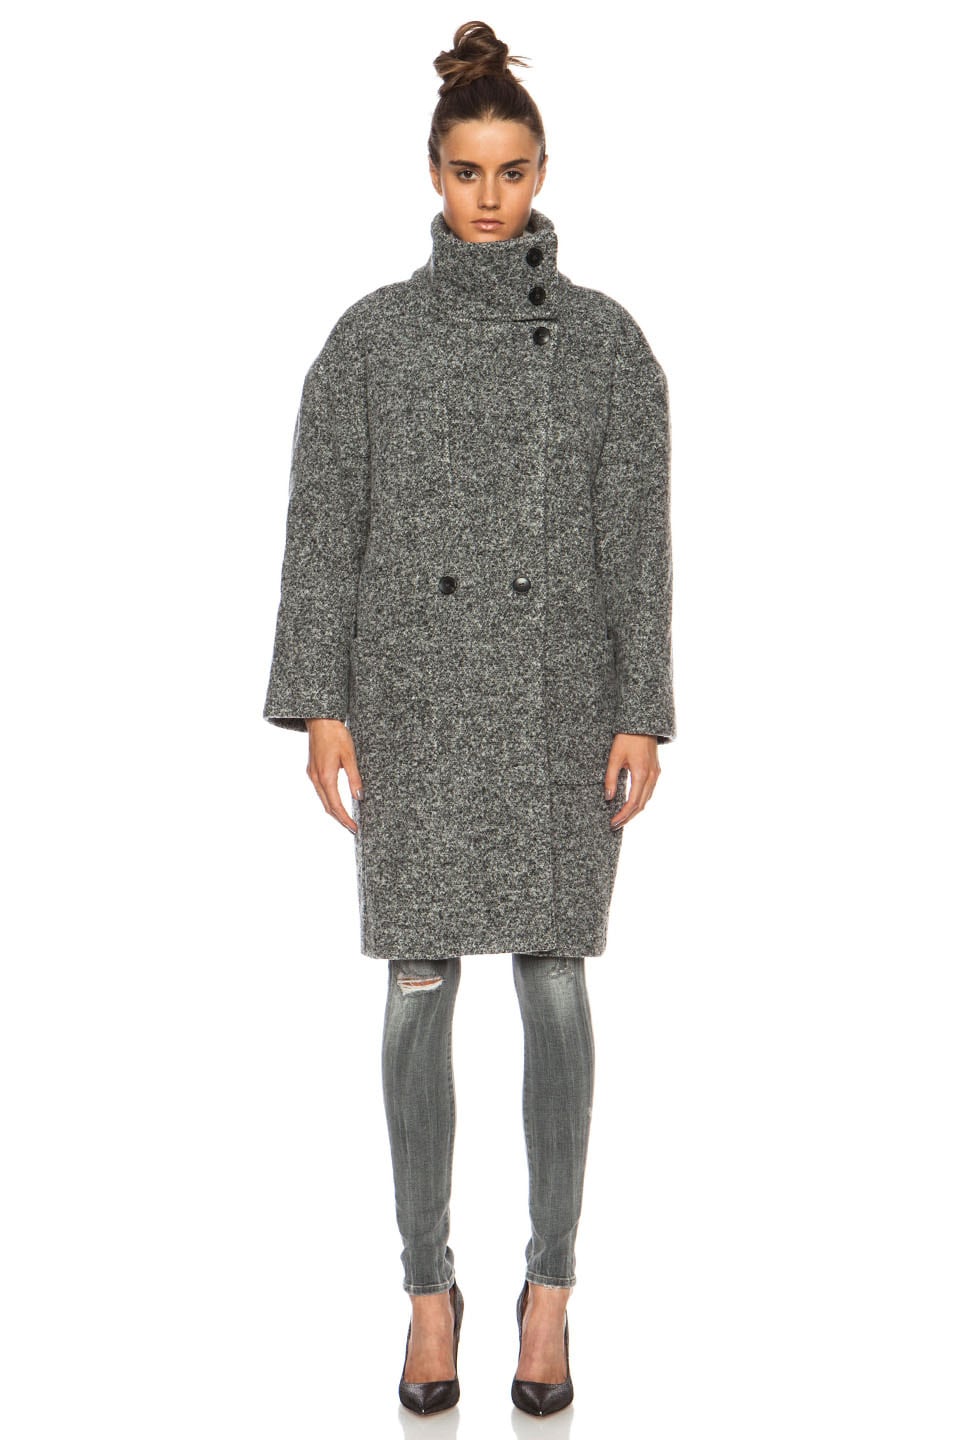 IRO Aylina Wool-Blend Jacket in Mixed Grey | FWRD